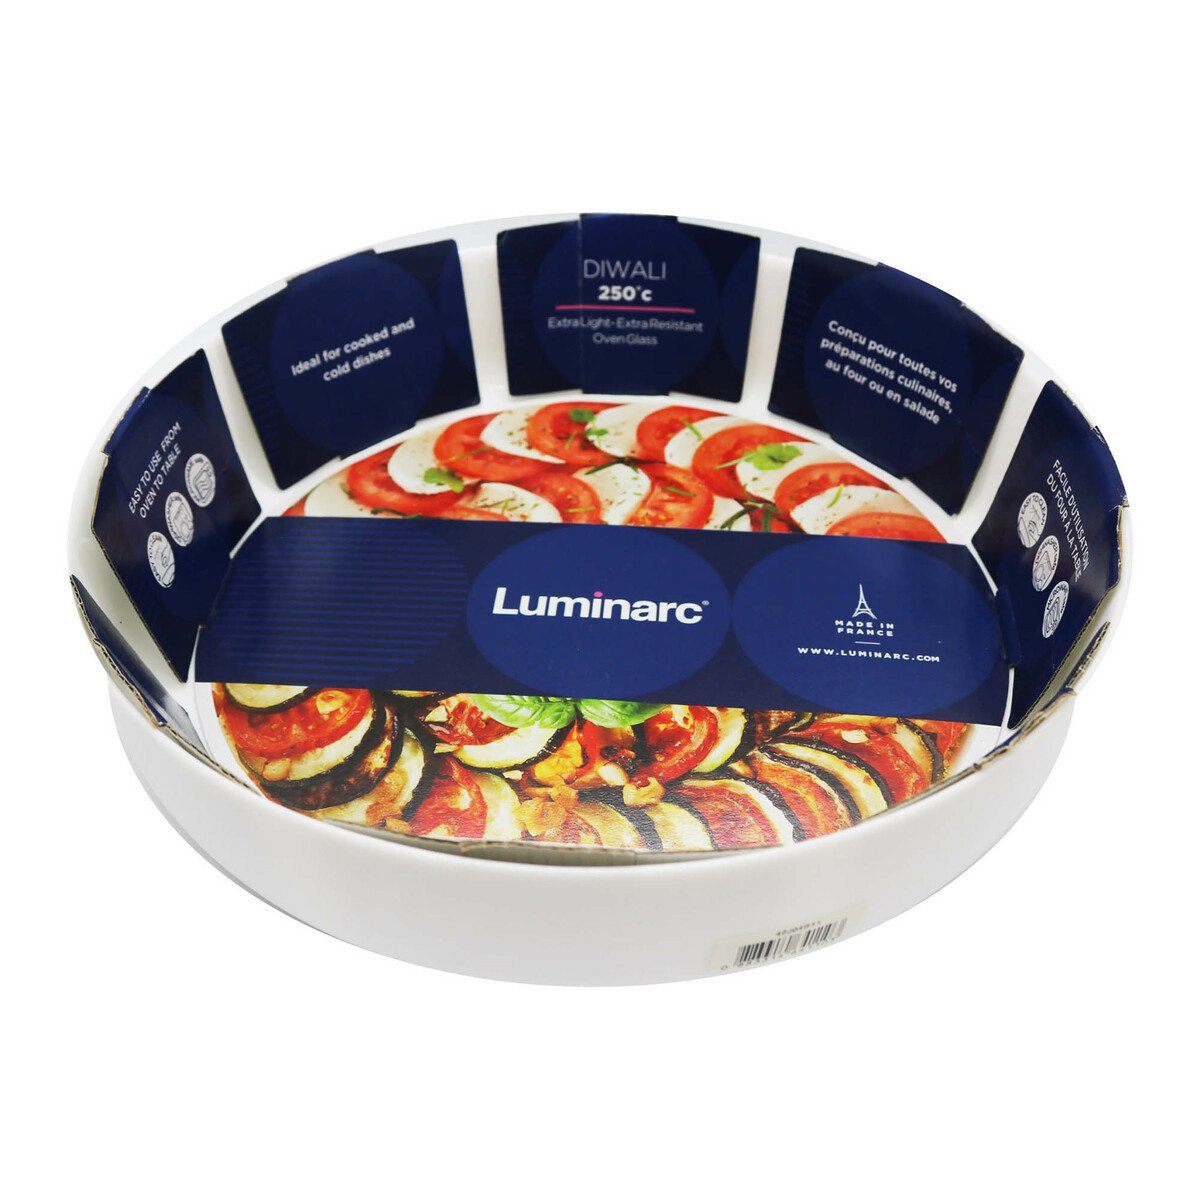 Luminarc Serving Dish Diwali 30cm